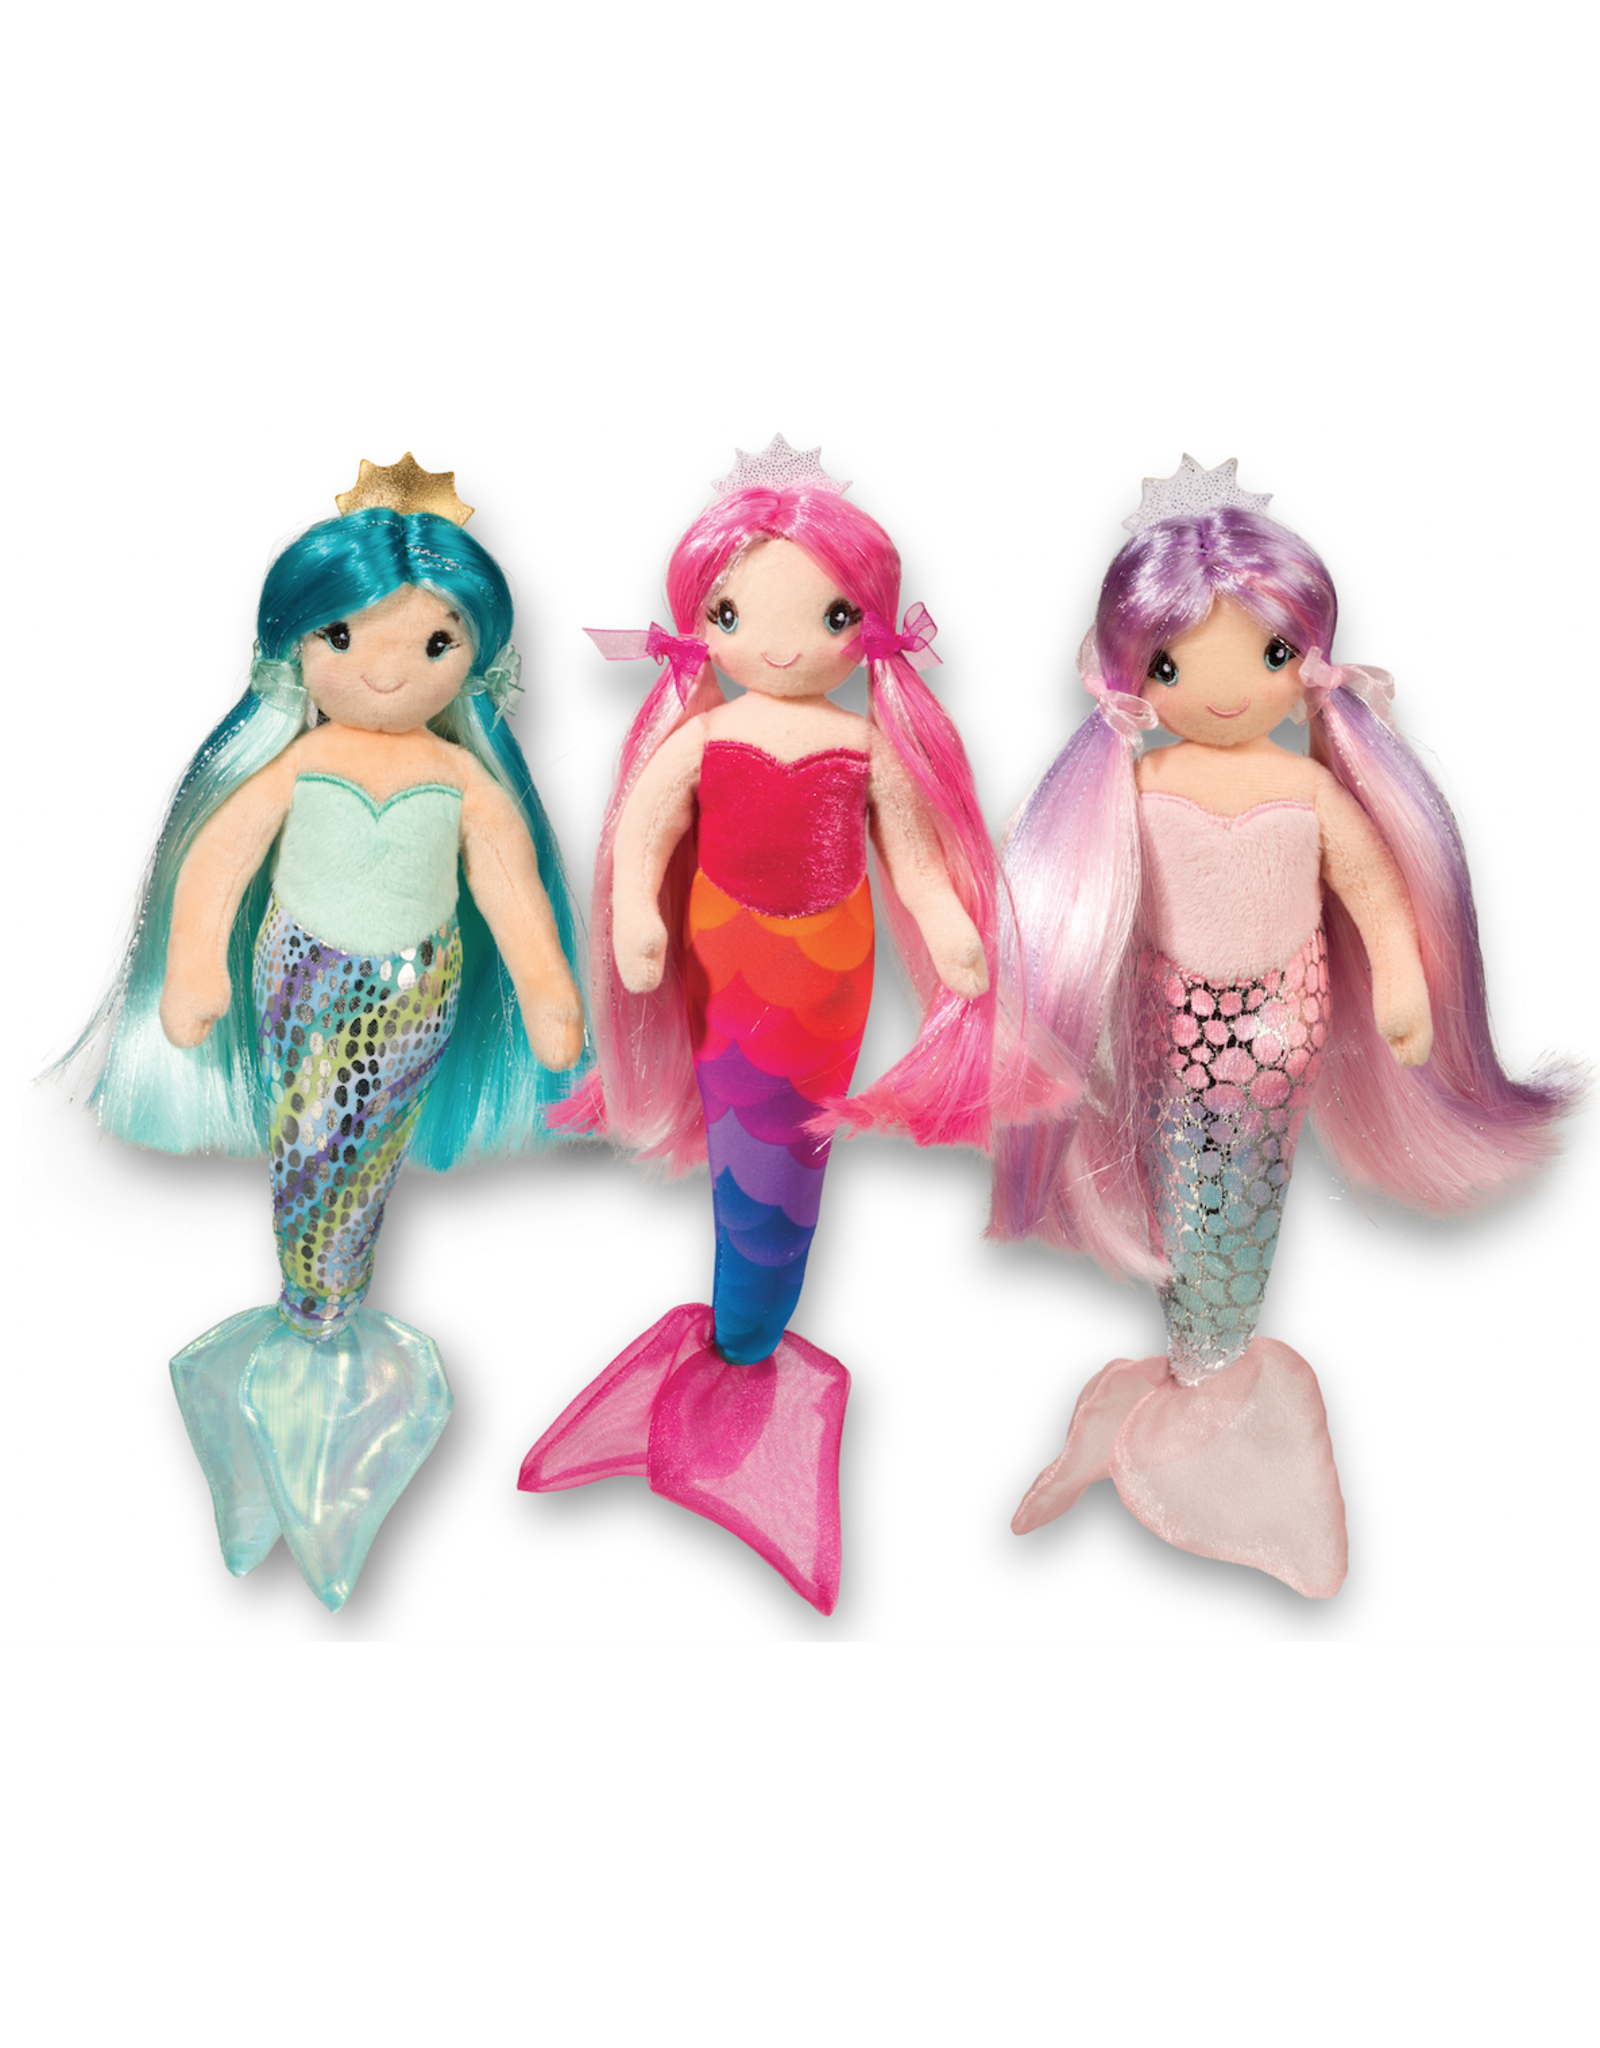 Douglas Princess Mermaids Assorted